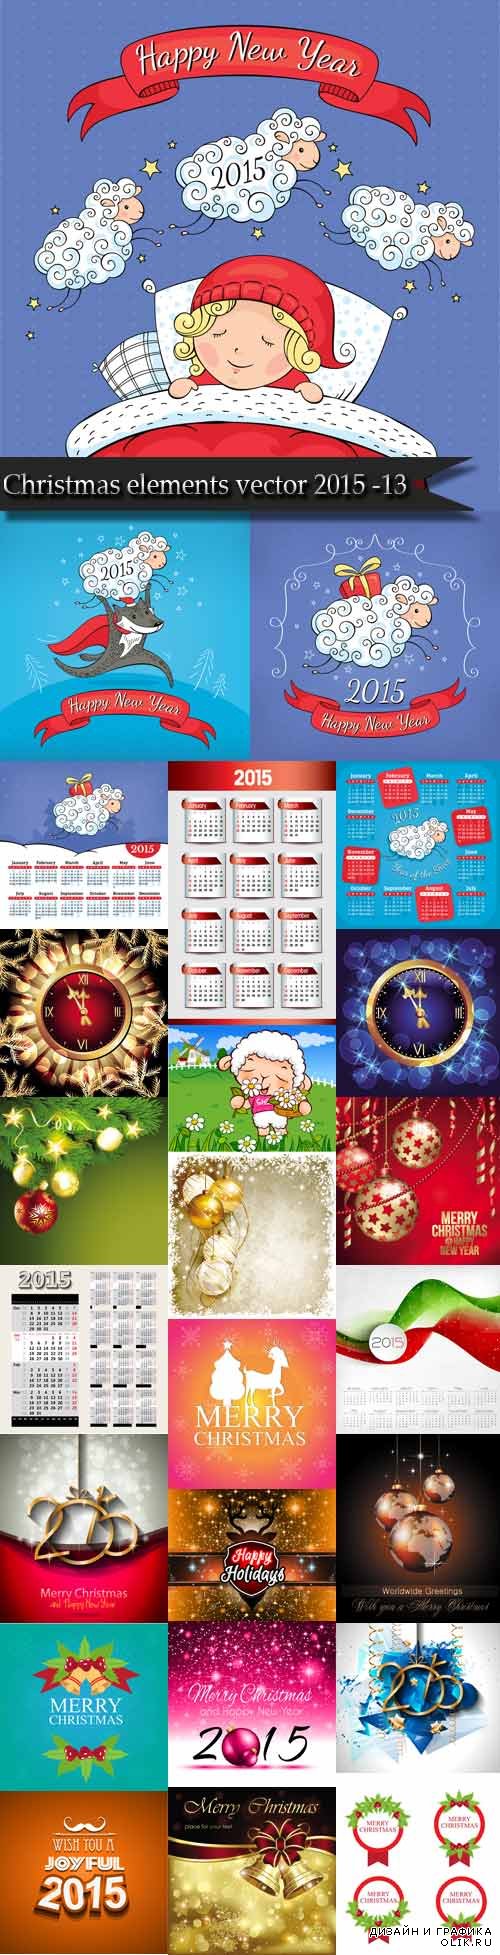 Christmas elements vector 2015 -13